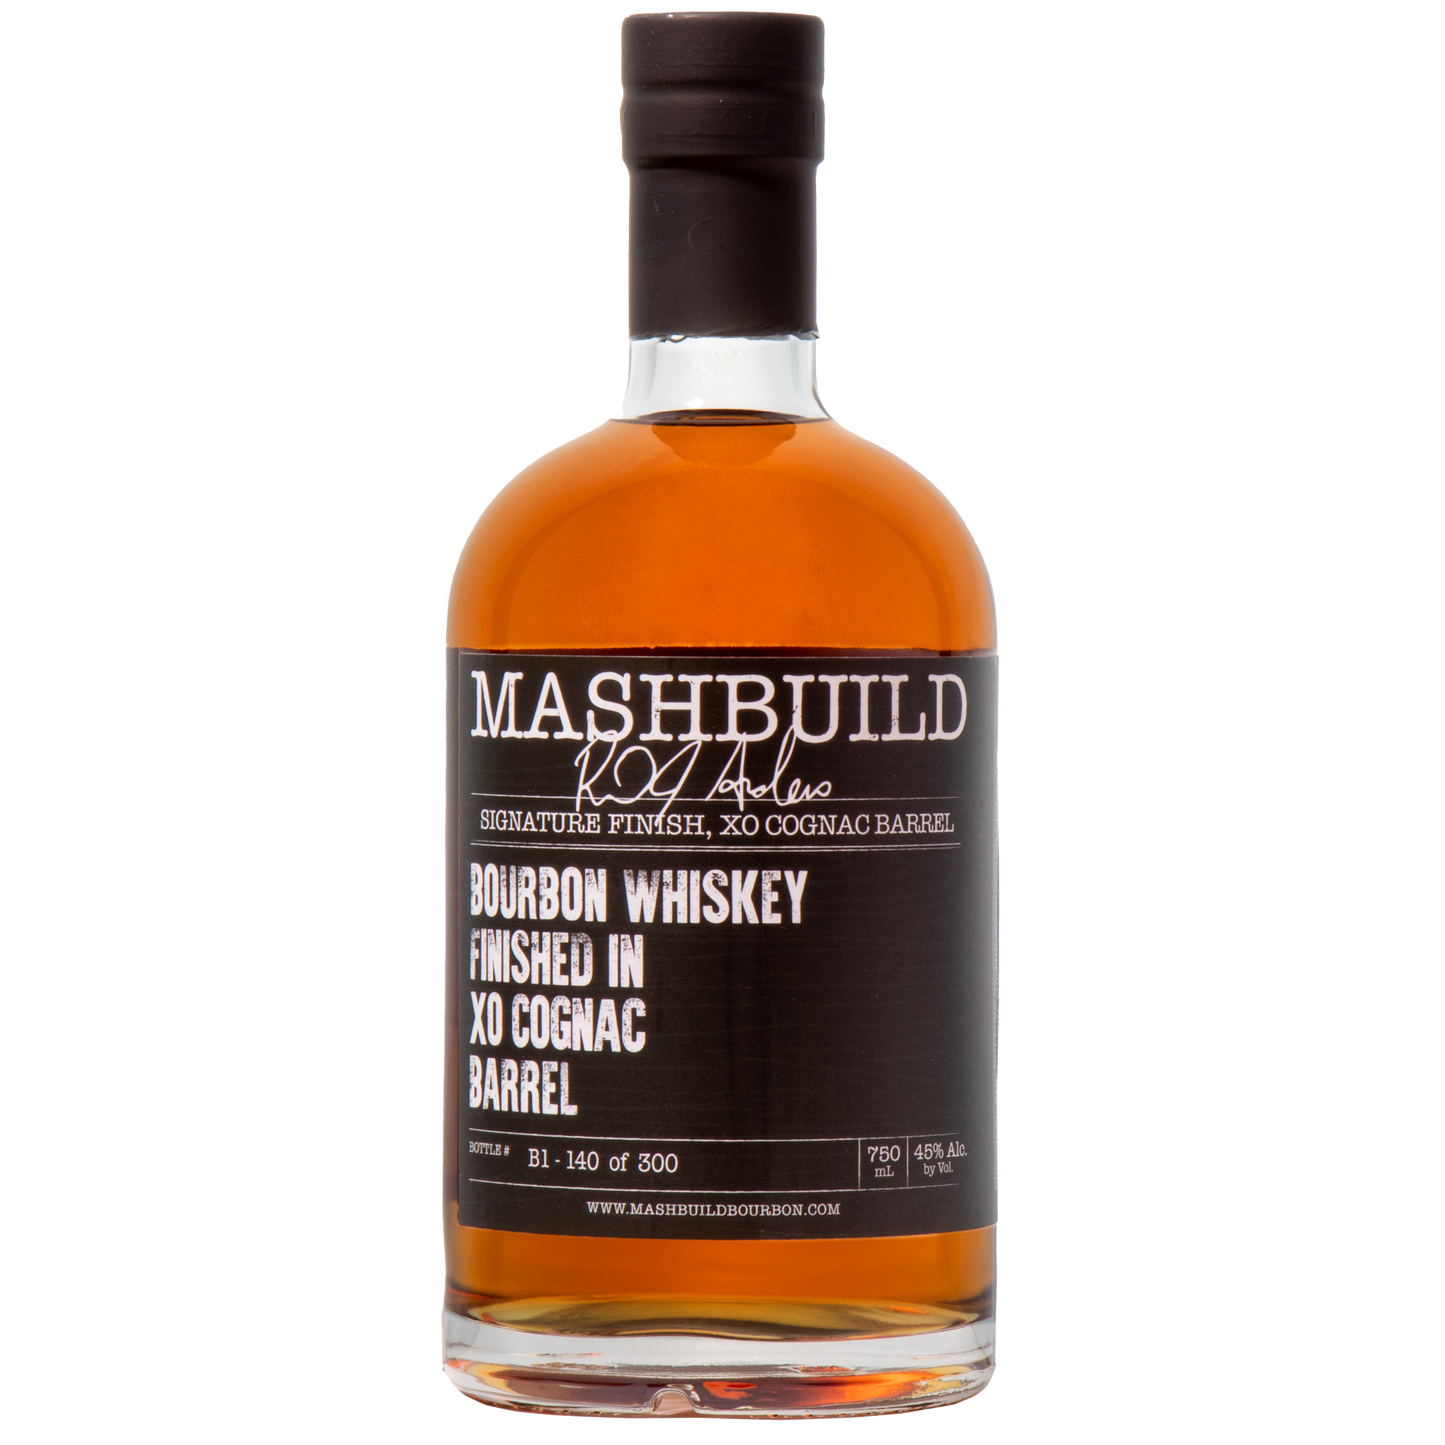 Farm and Spirit 'Mashbuild' Bourbon Whiskey finished in XO Cognac Barrel